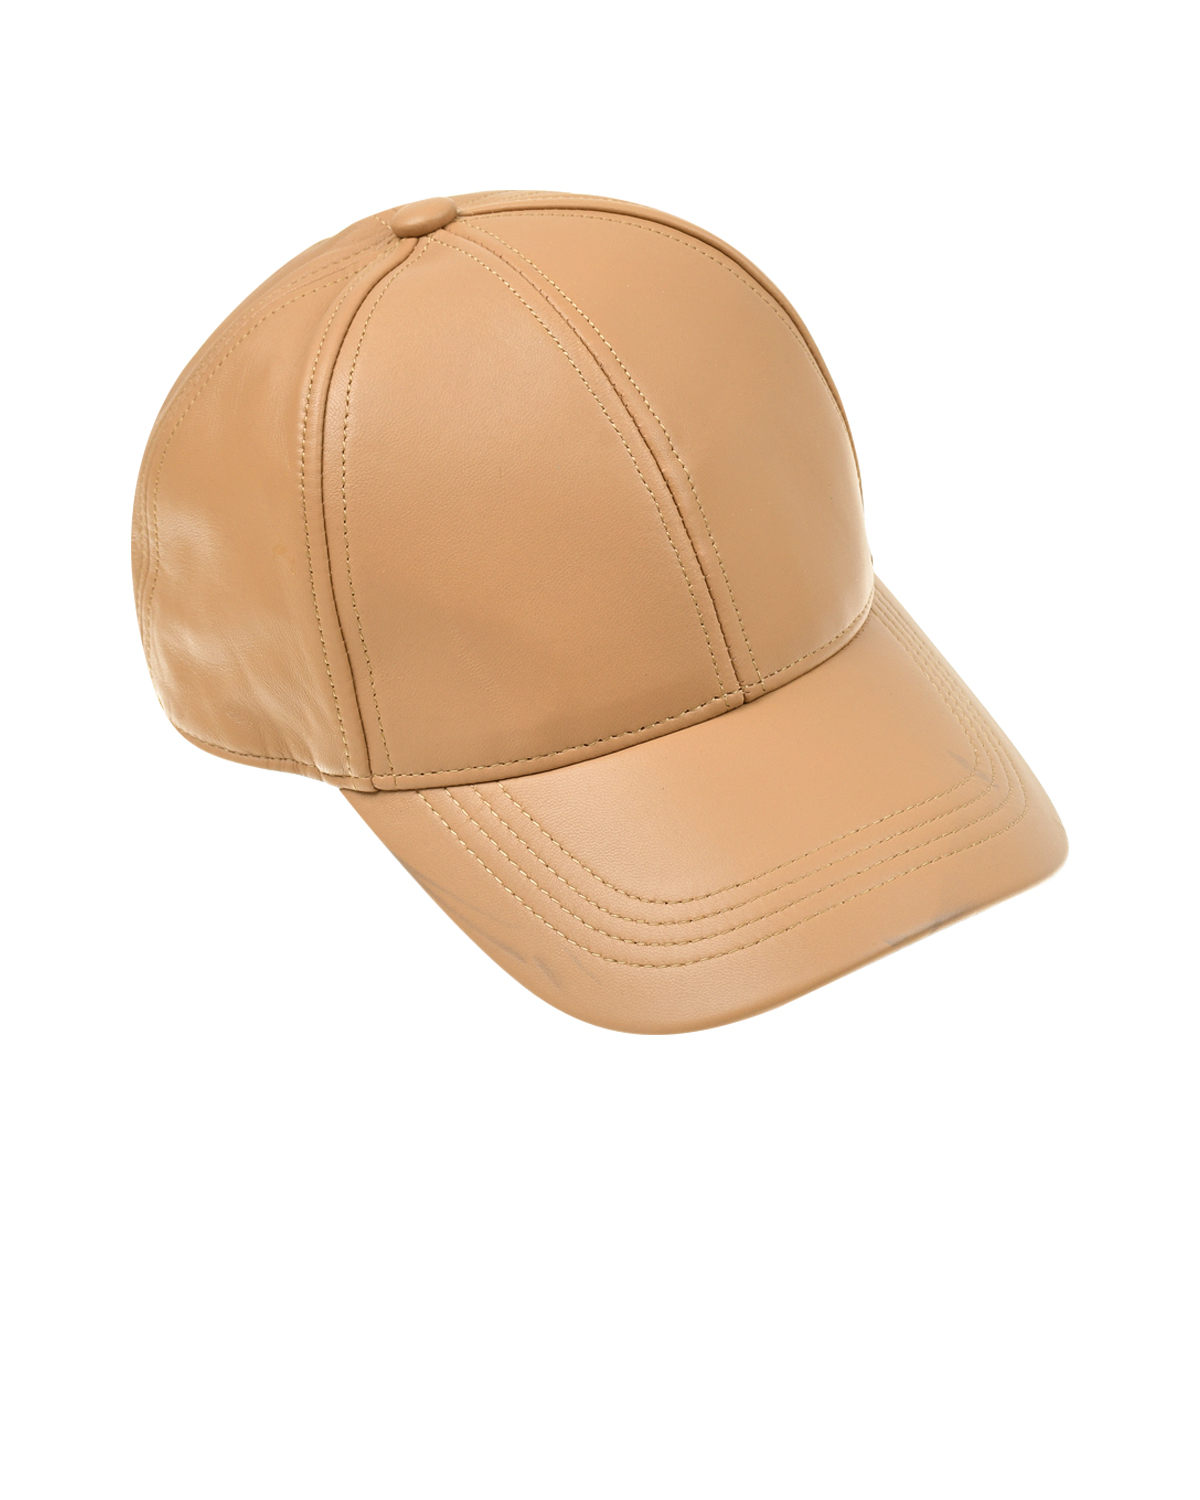 Бежевая кожаная кепка Yves Salomon, размер unica, цвет бежевый